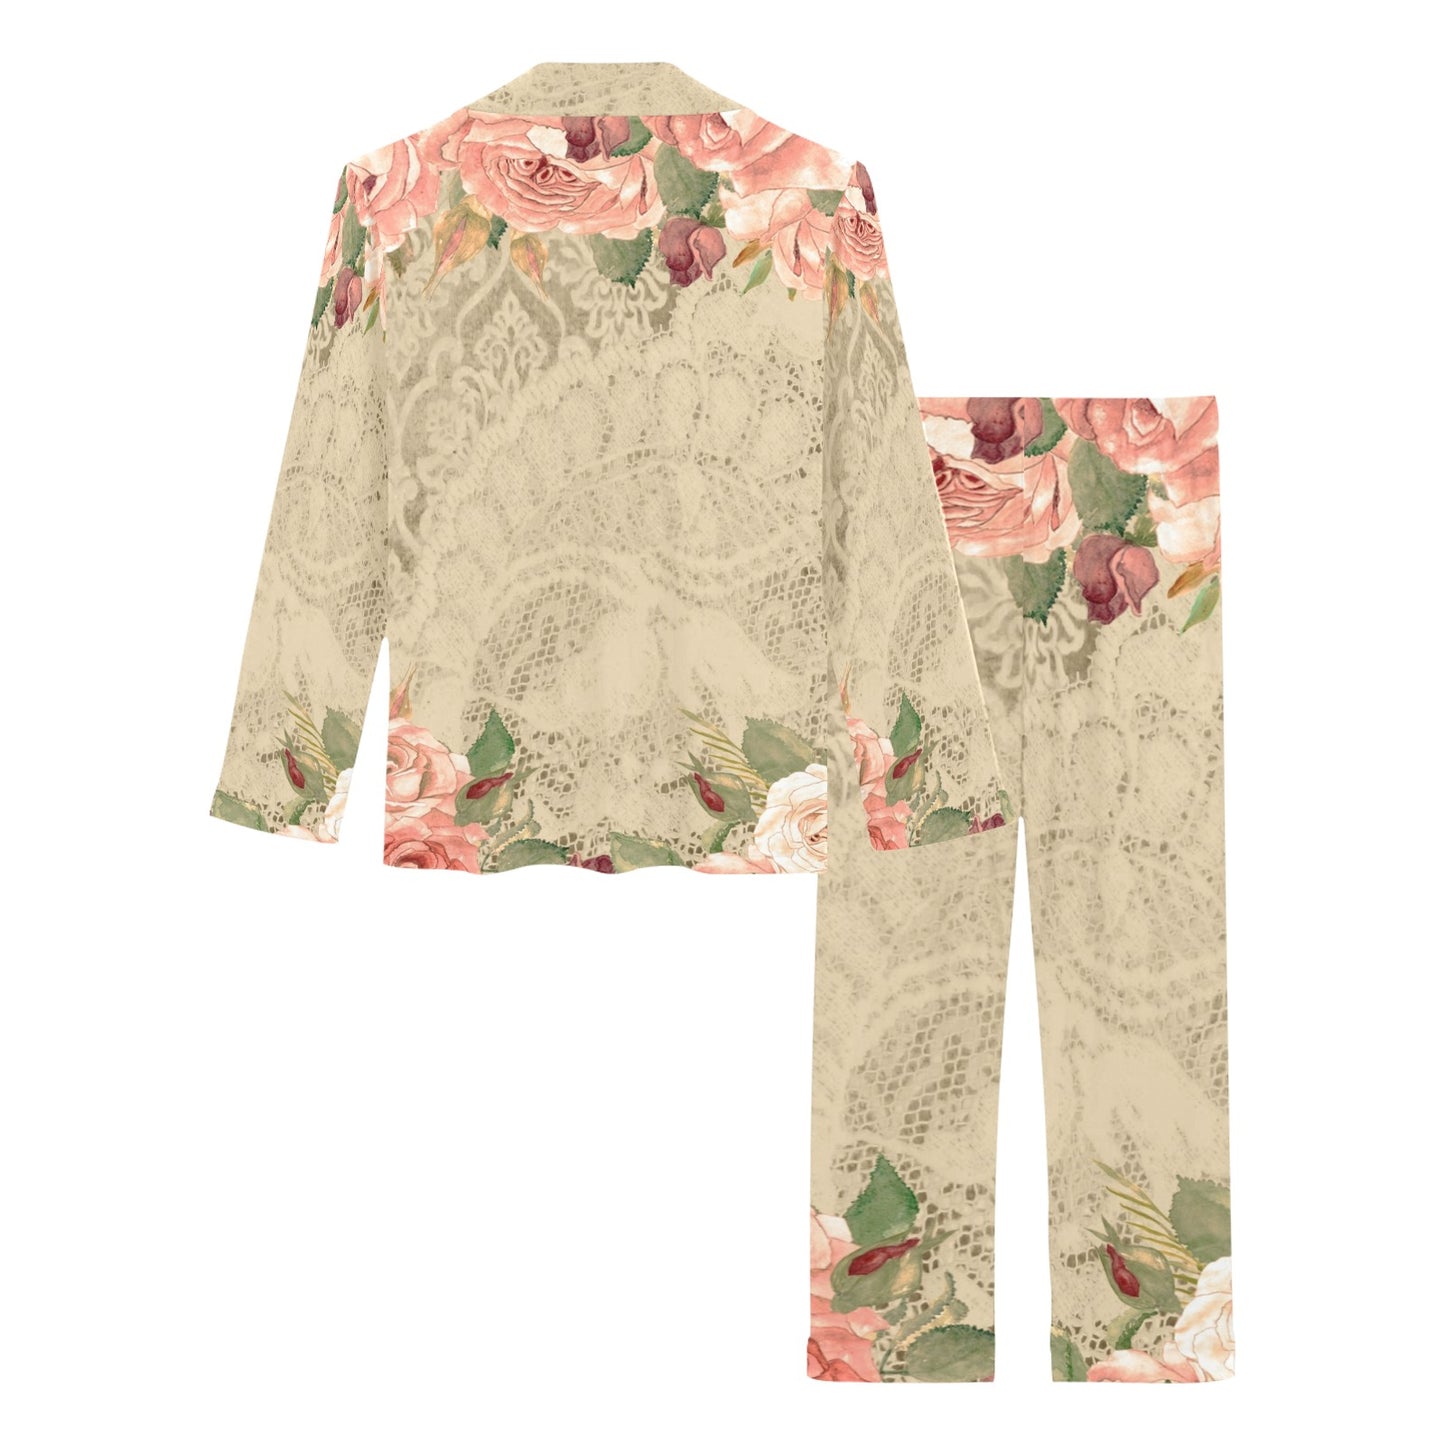 Victorian printed lace pajama set, design 25 Women's Long Pajama Set (Sets 02)